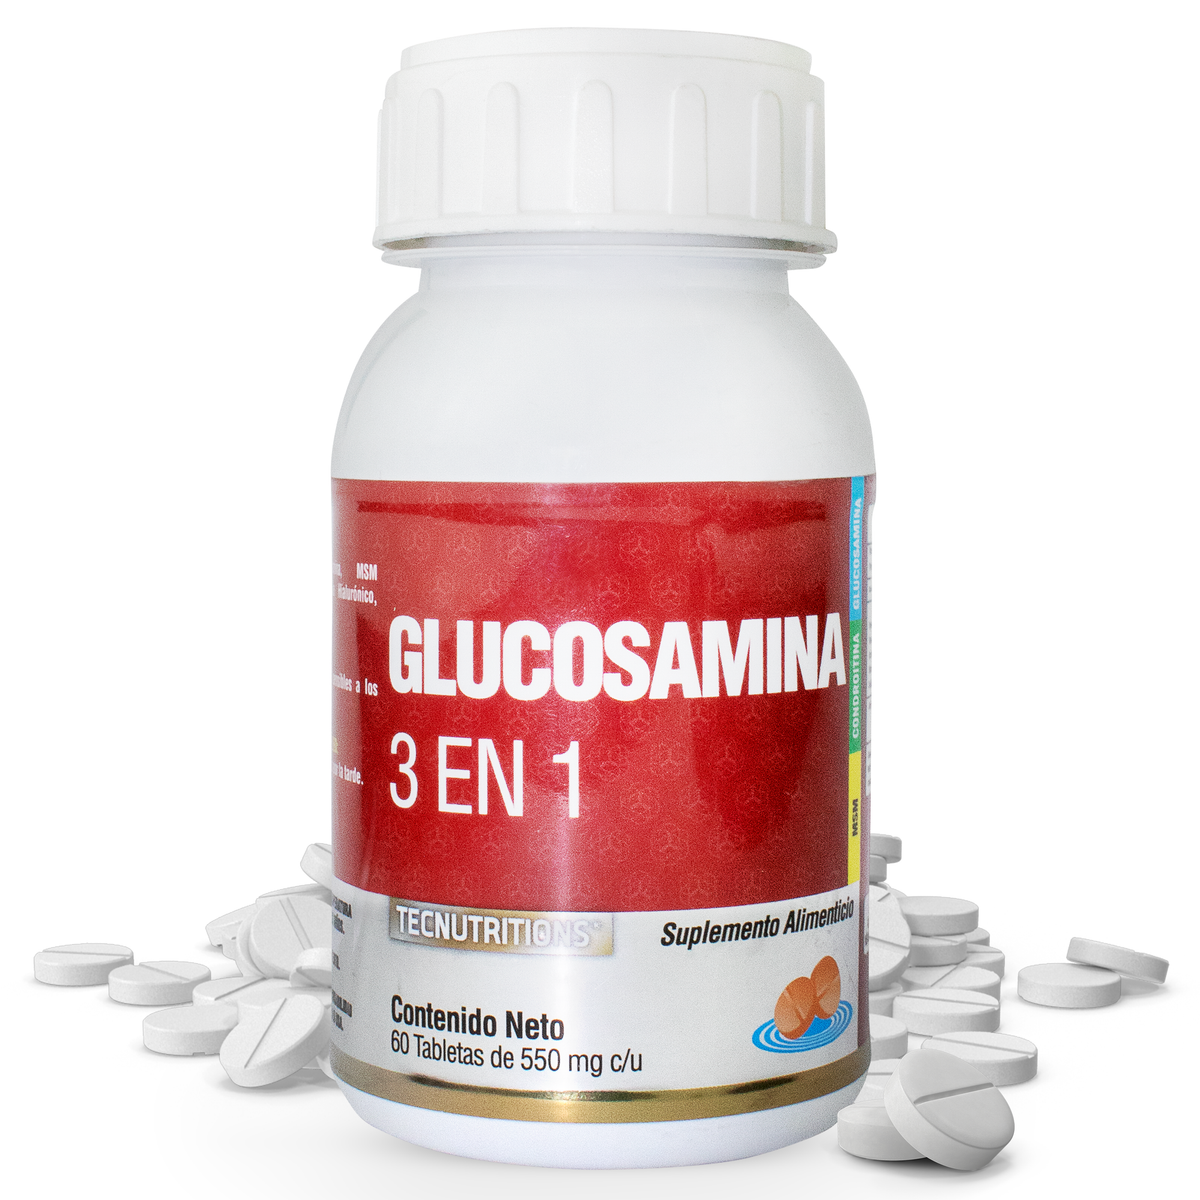 GLUCOSAMINE 3 IN 1